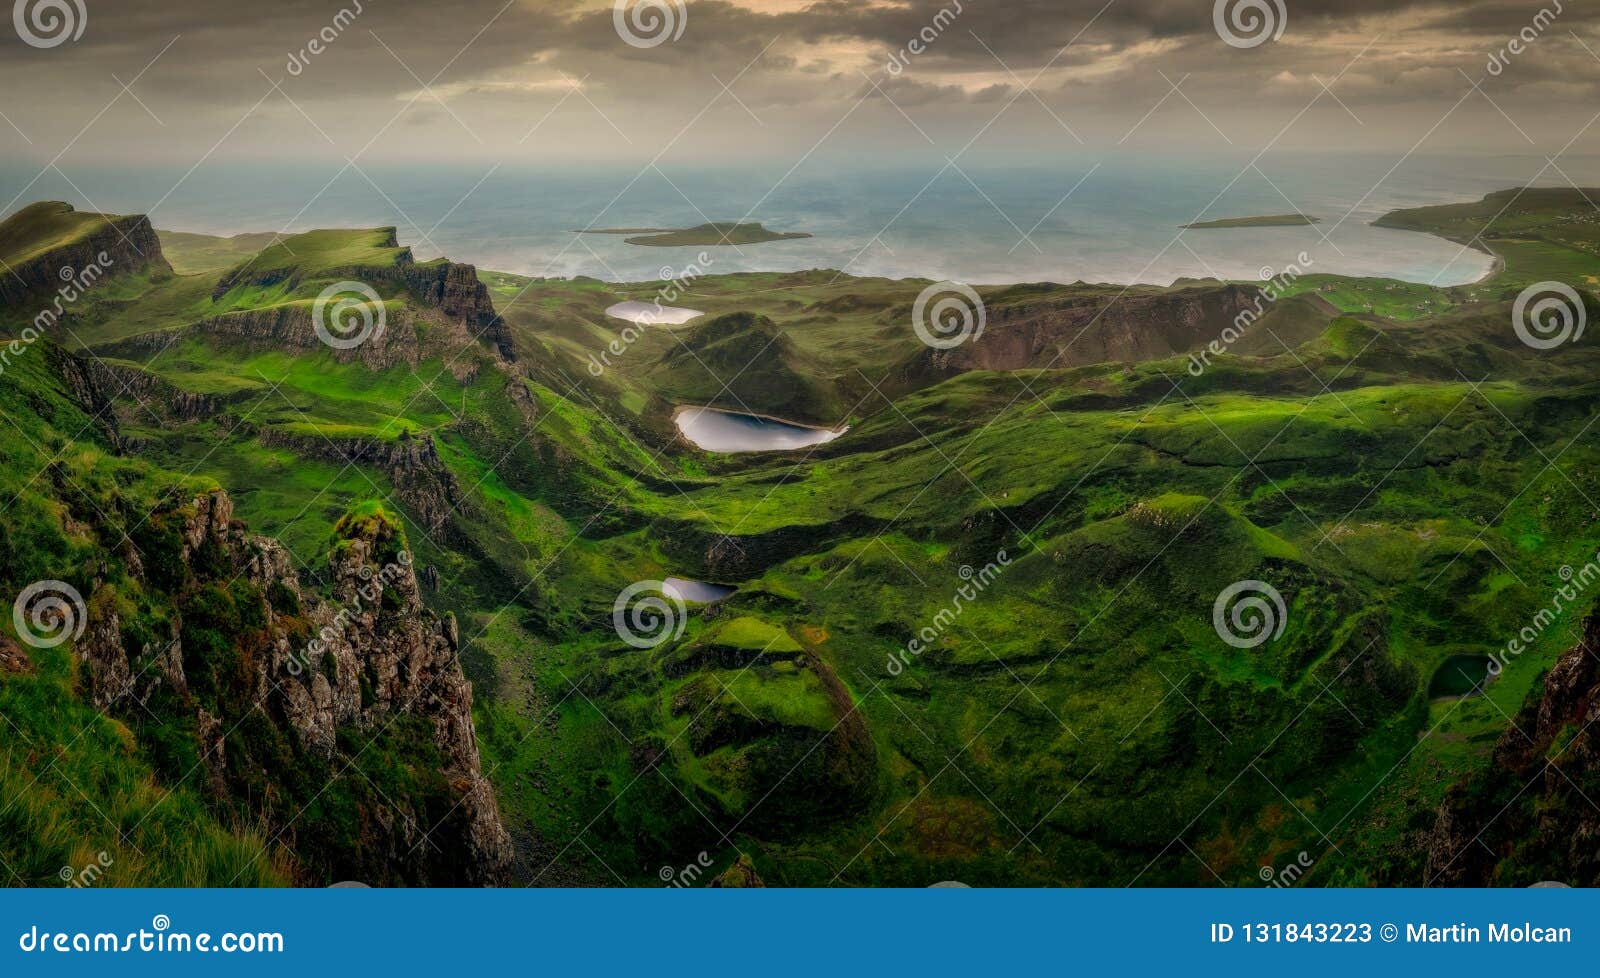 panoramic landscape view of quiraing coastline in scottish highlands, scotland, uk